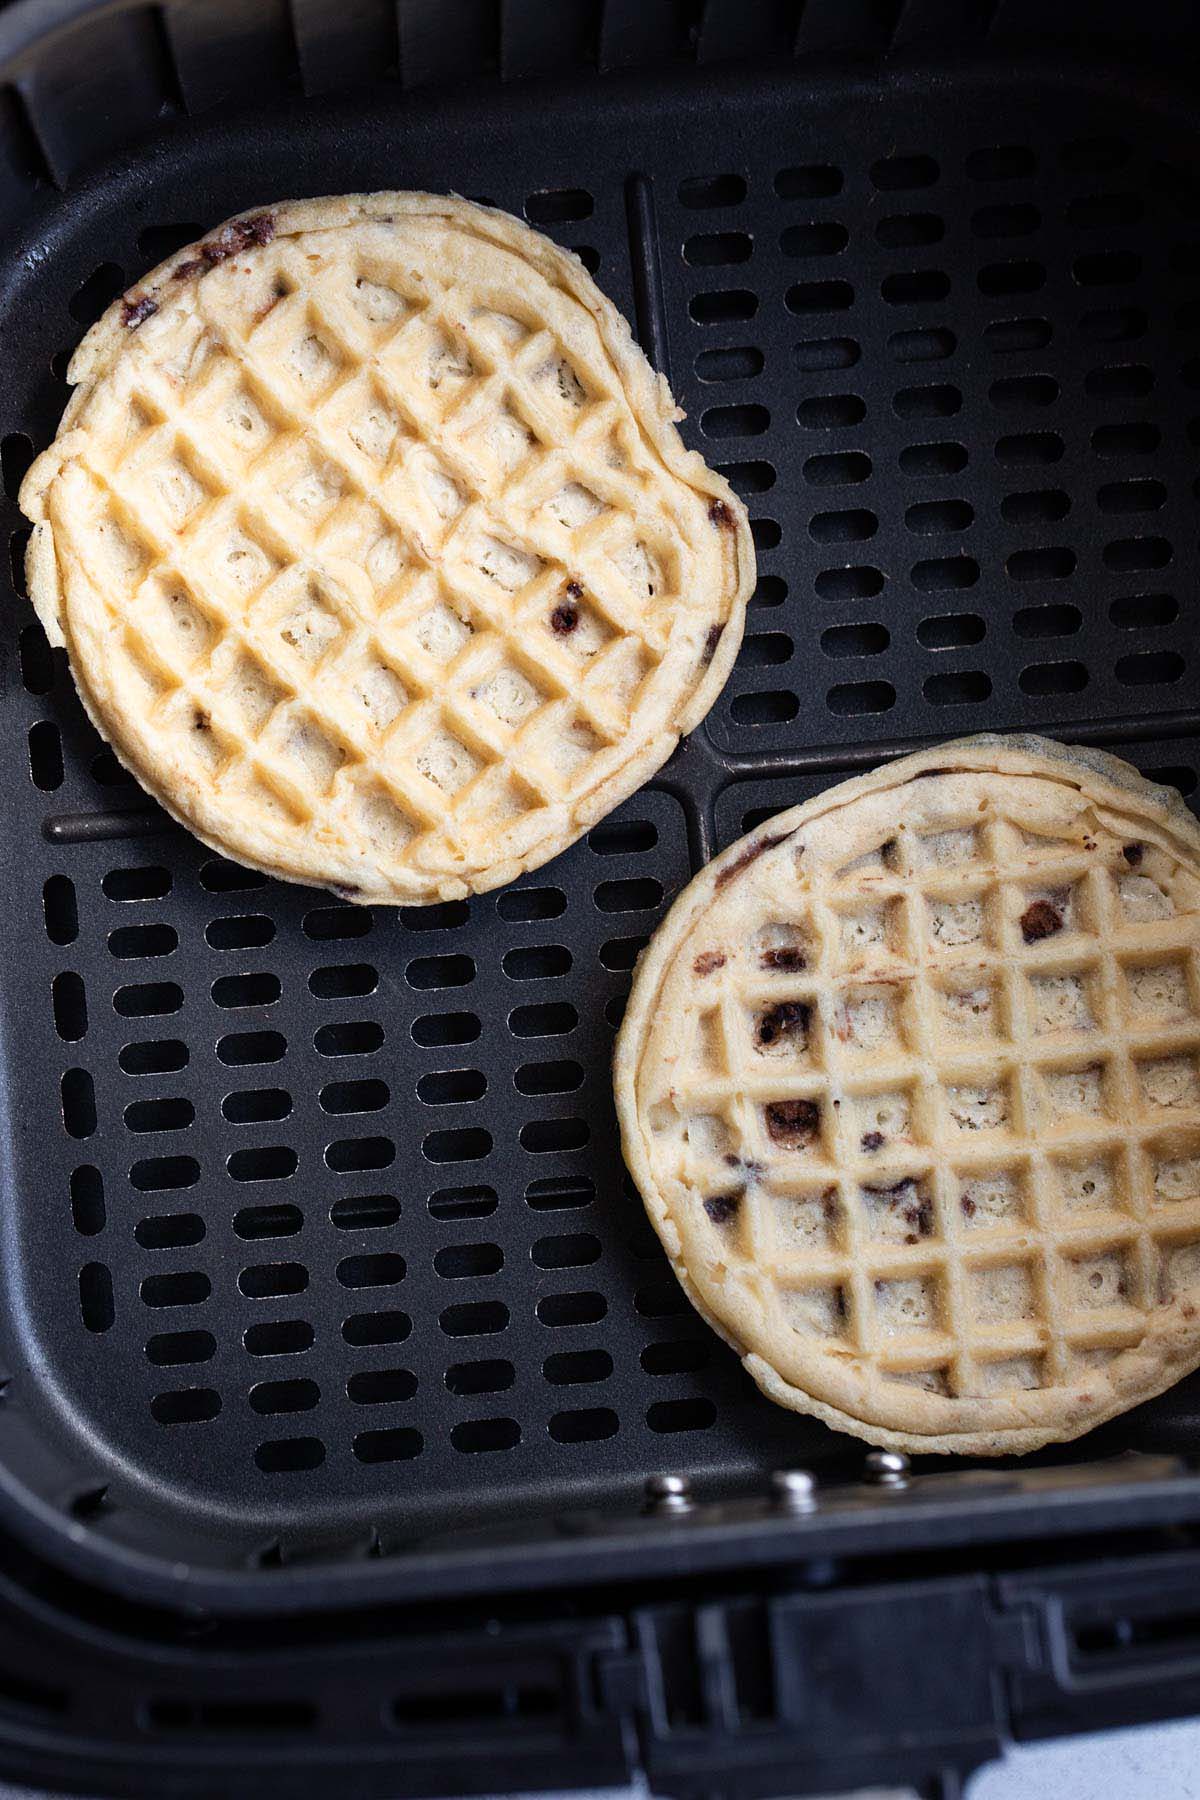 Uncooked waffles in air fryer basket.